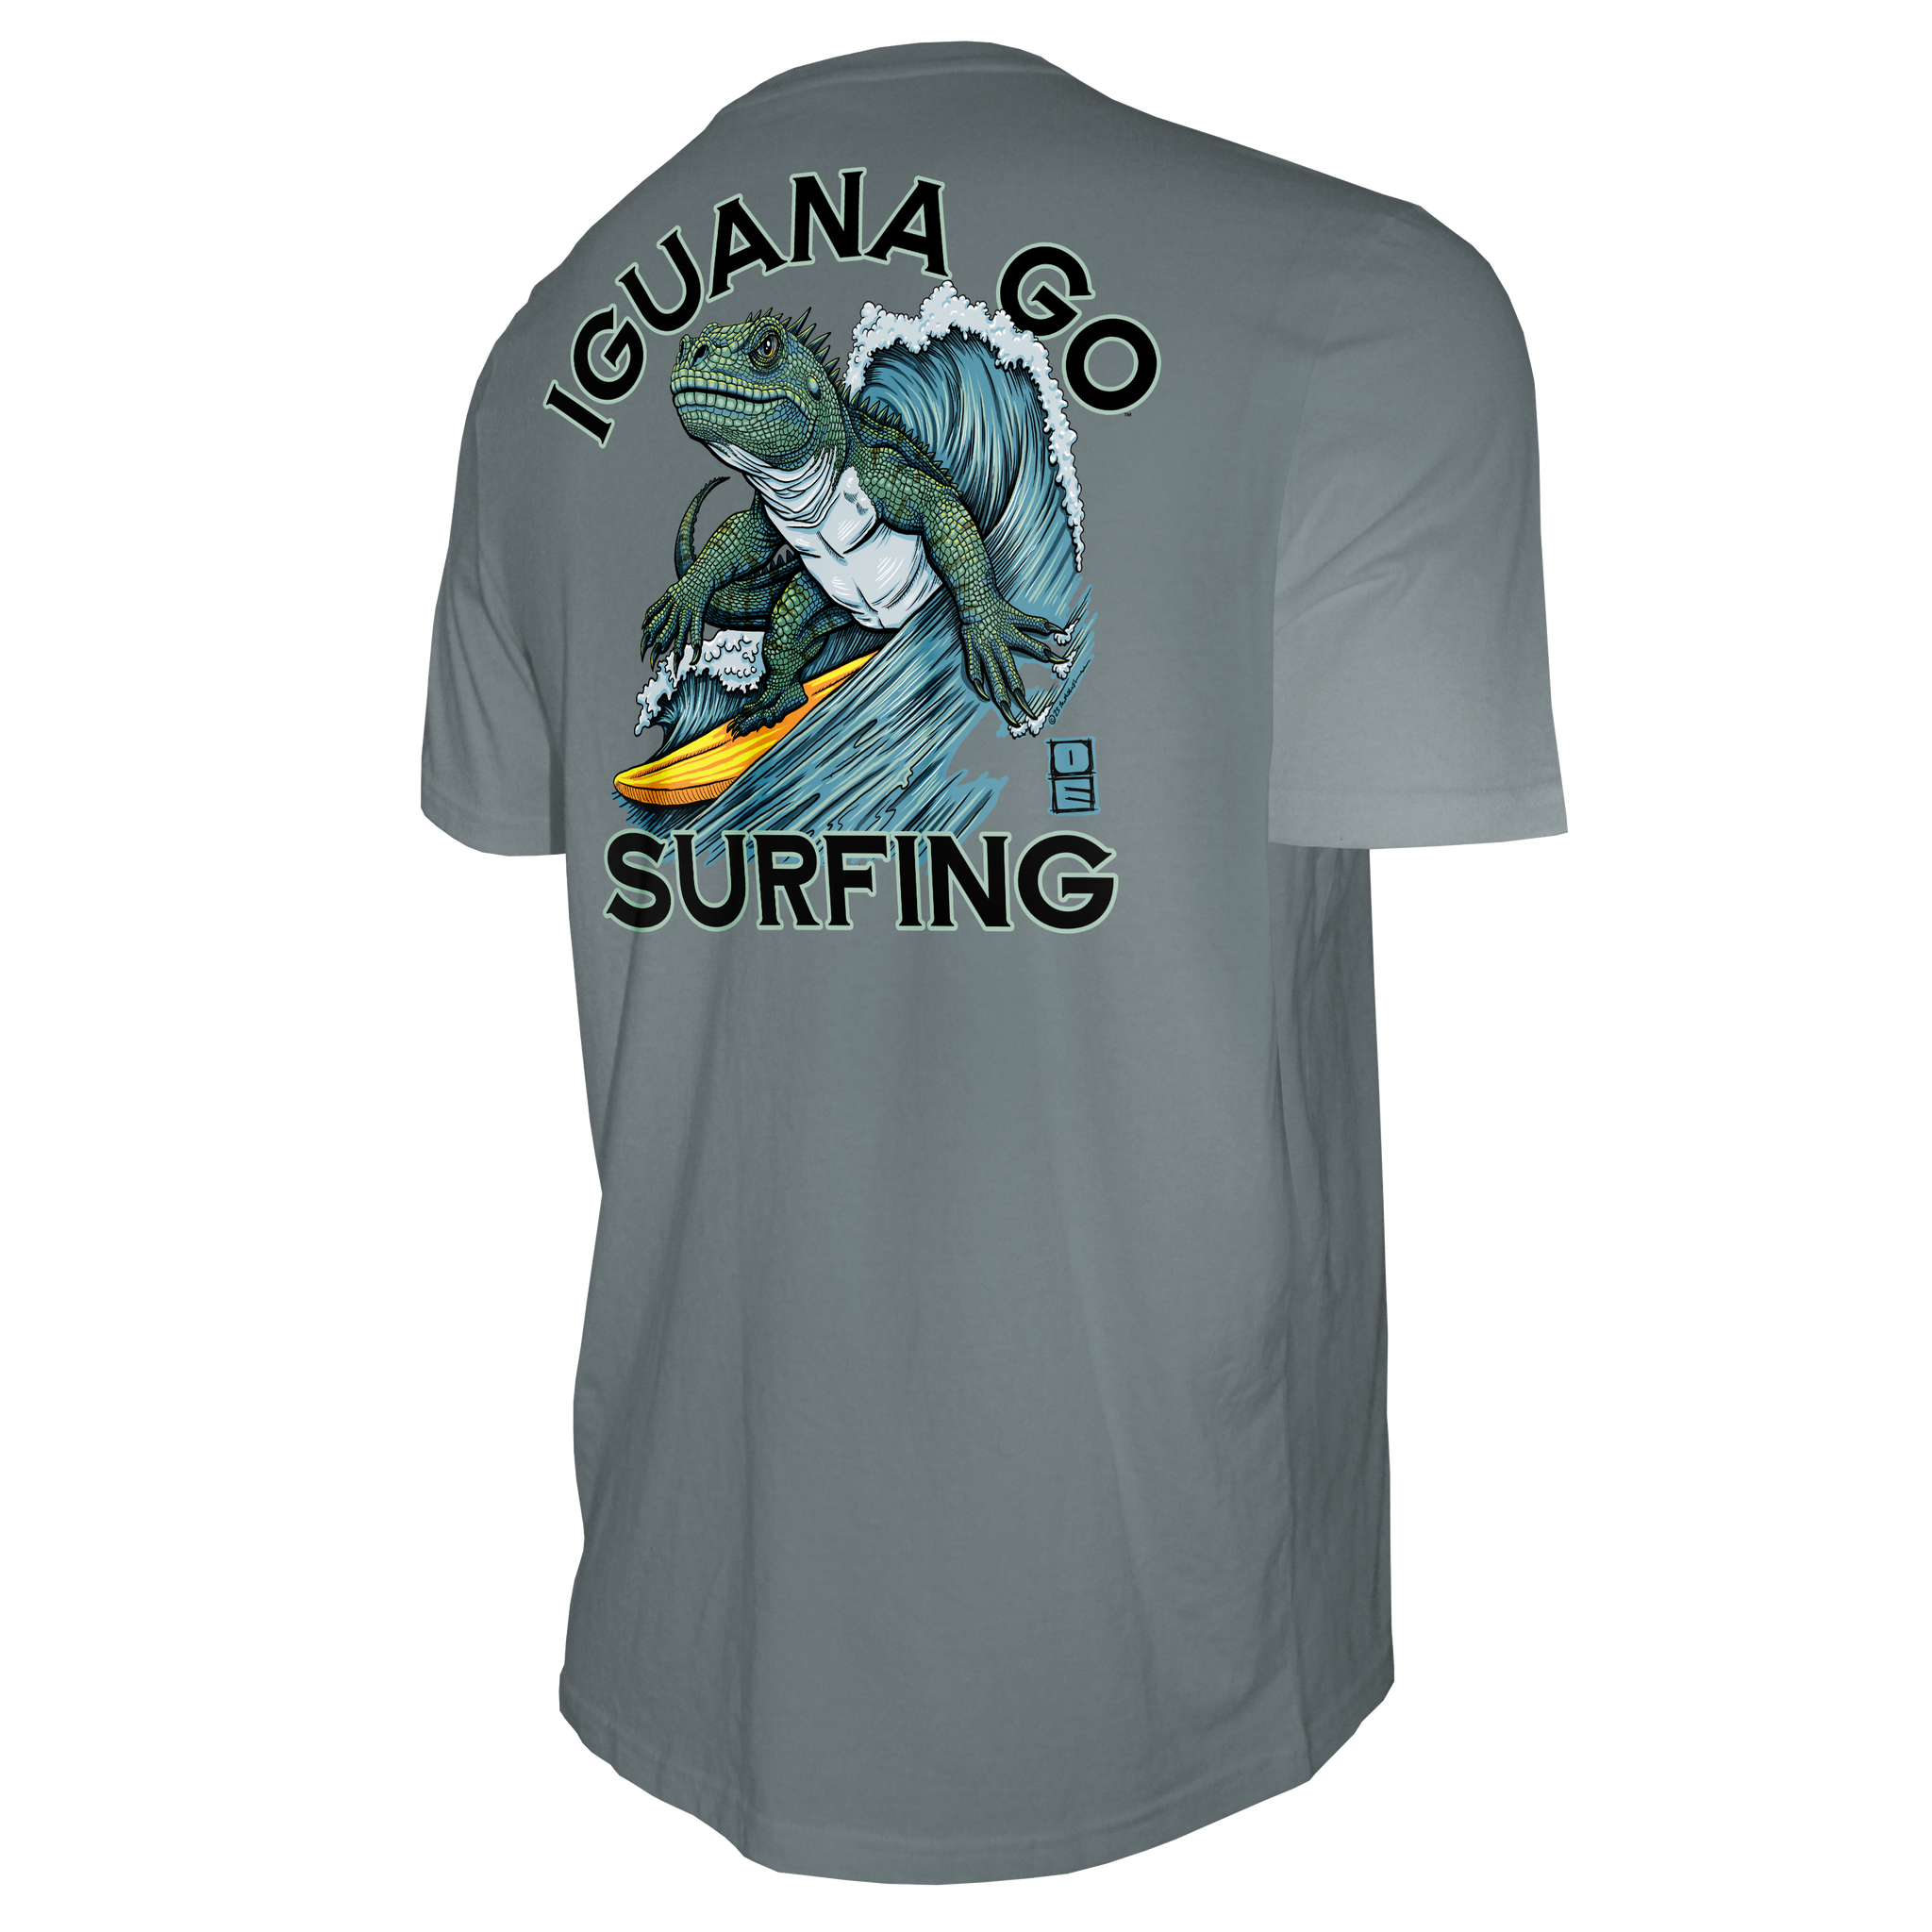 Outdoor Endeavors Attitude- American Made Tee - Iguana Go Surfing